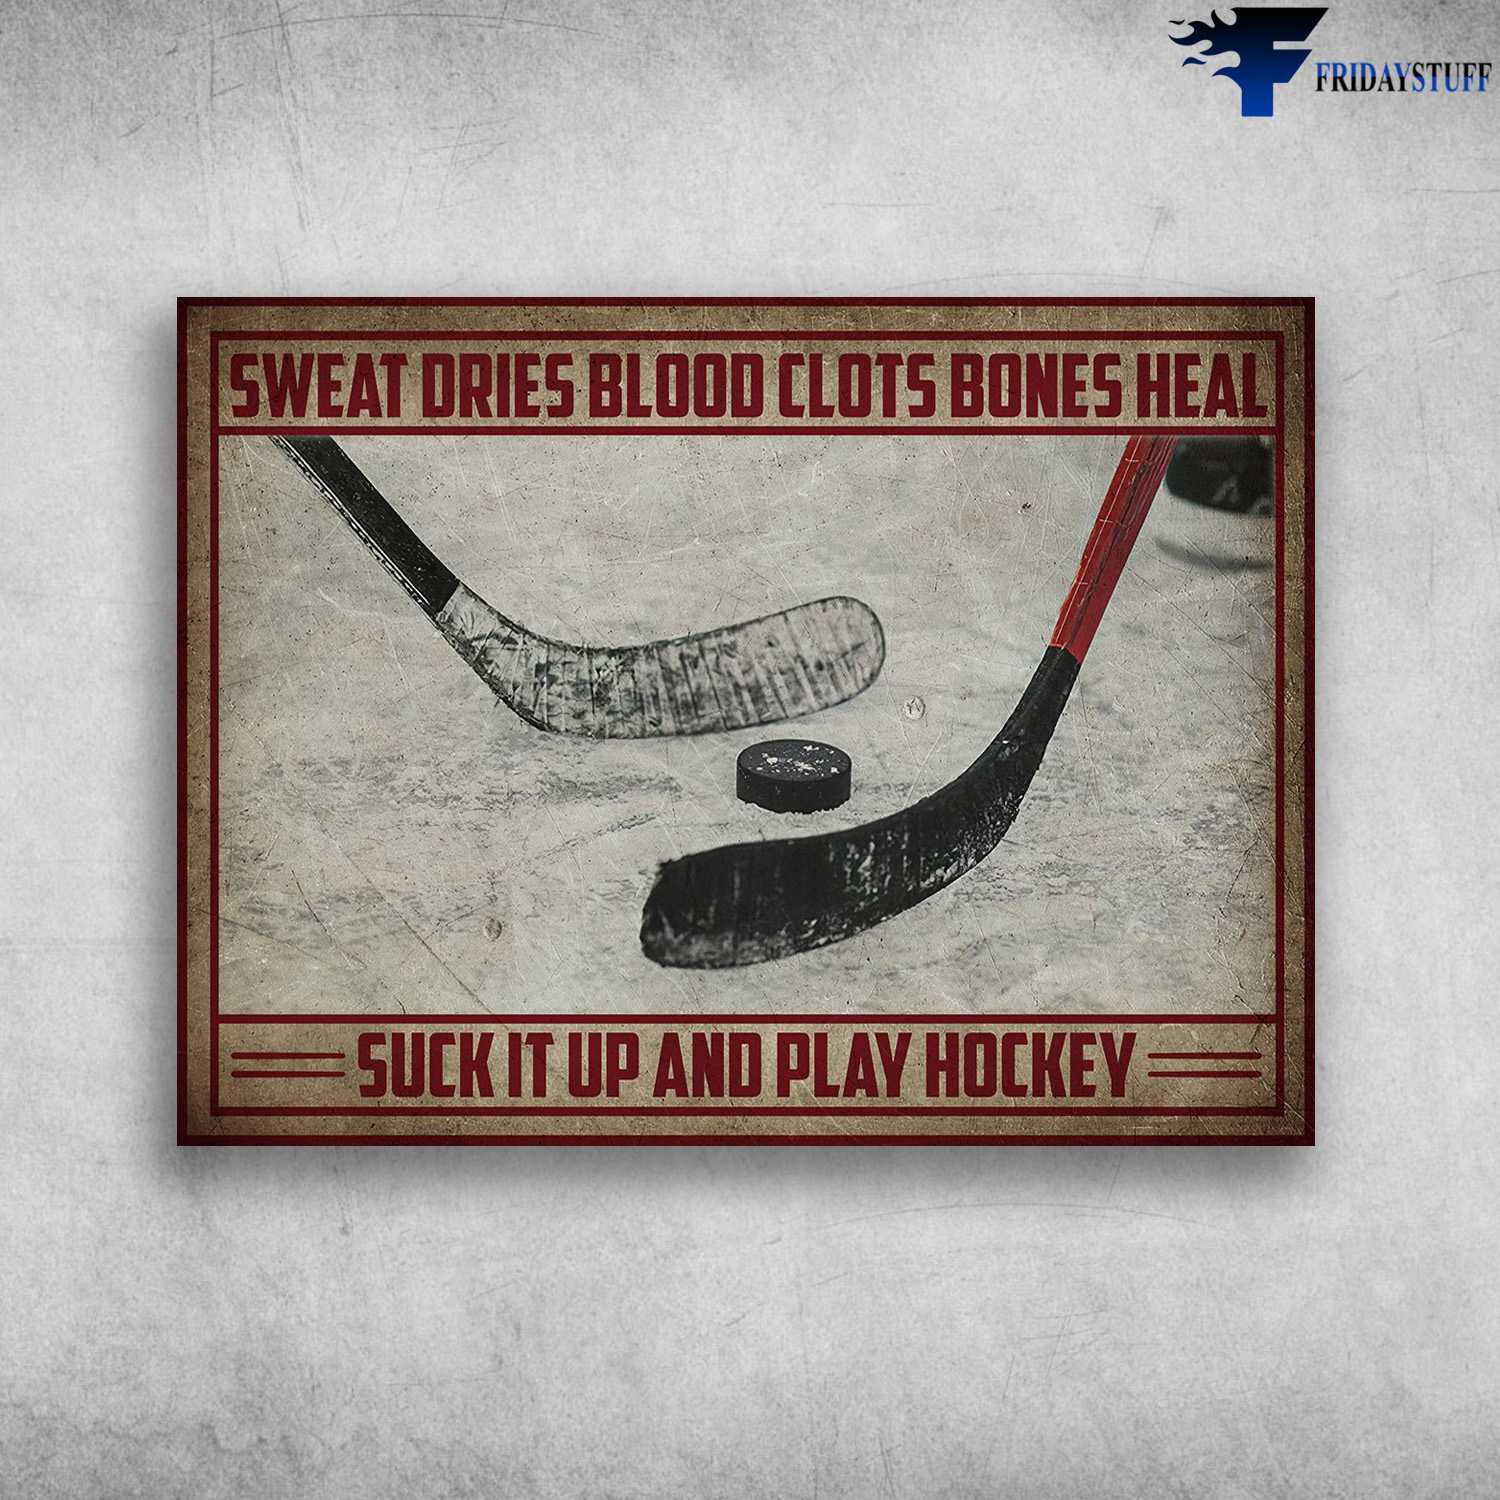 Ice Hockey, Hockey Poster - Sweat Dries Blood Clots Bones Heal, Suck It Up And Play Hockey